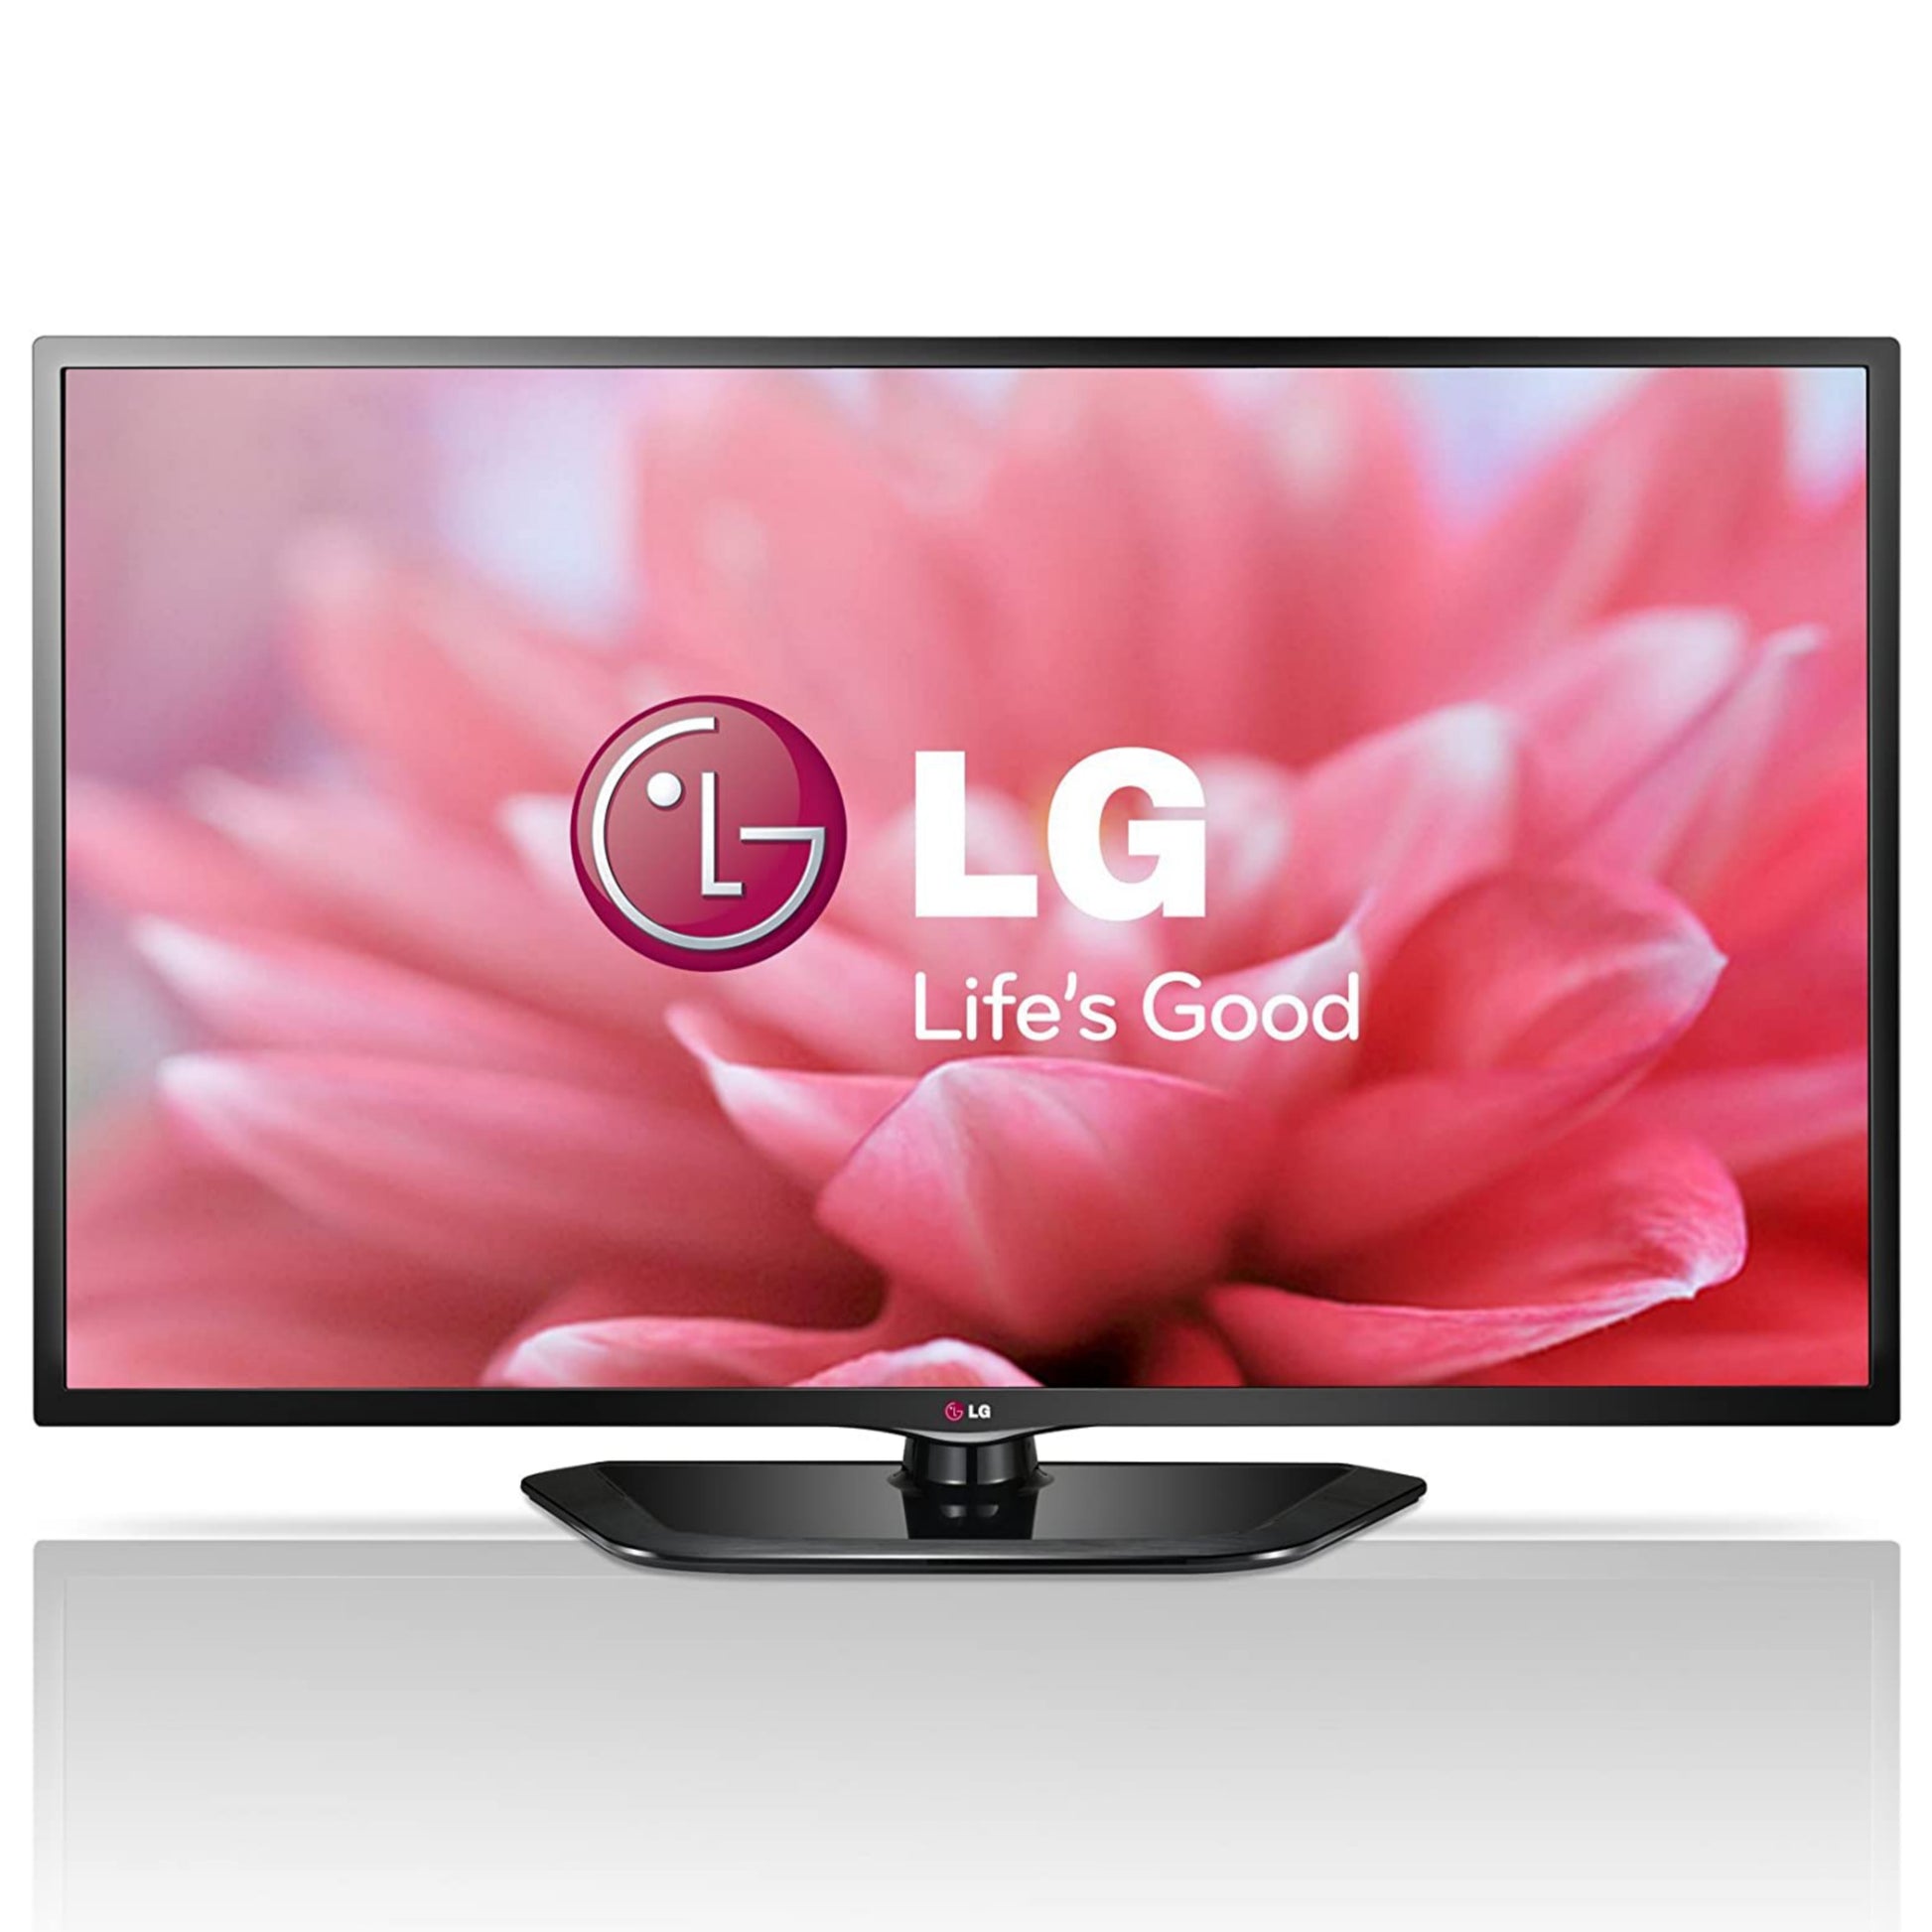 LG 32 Inch Widescreen 1080p Full HD LED TV 32LN5400 - London Used